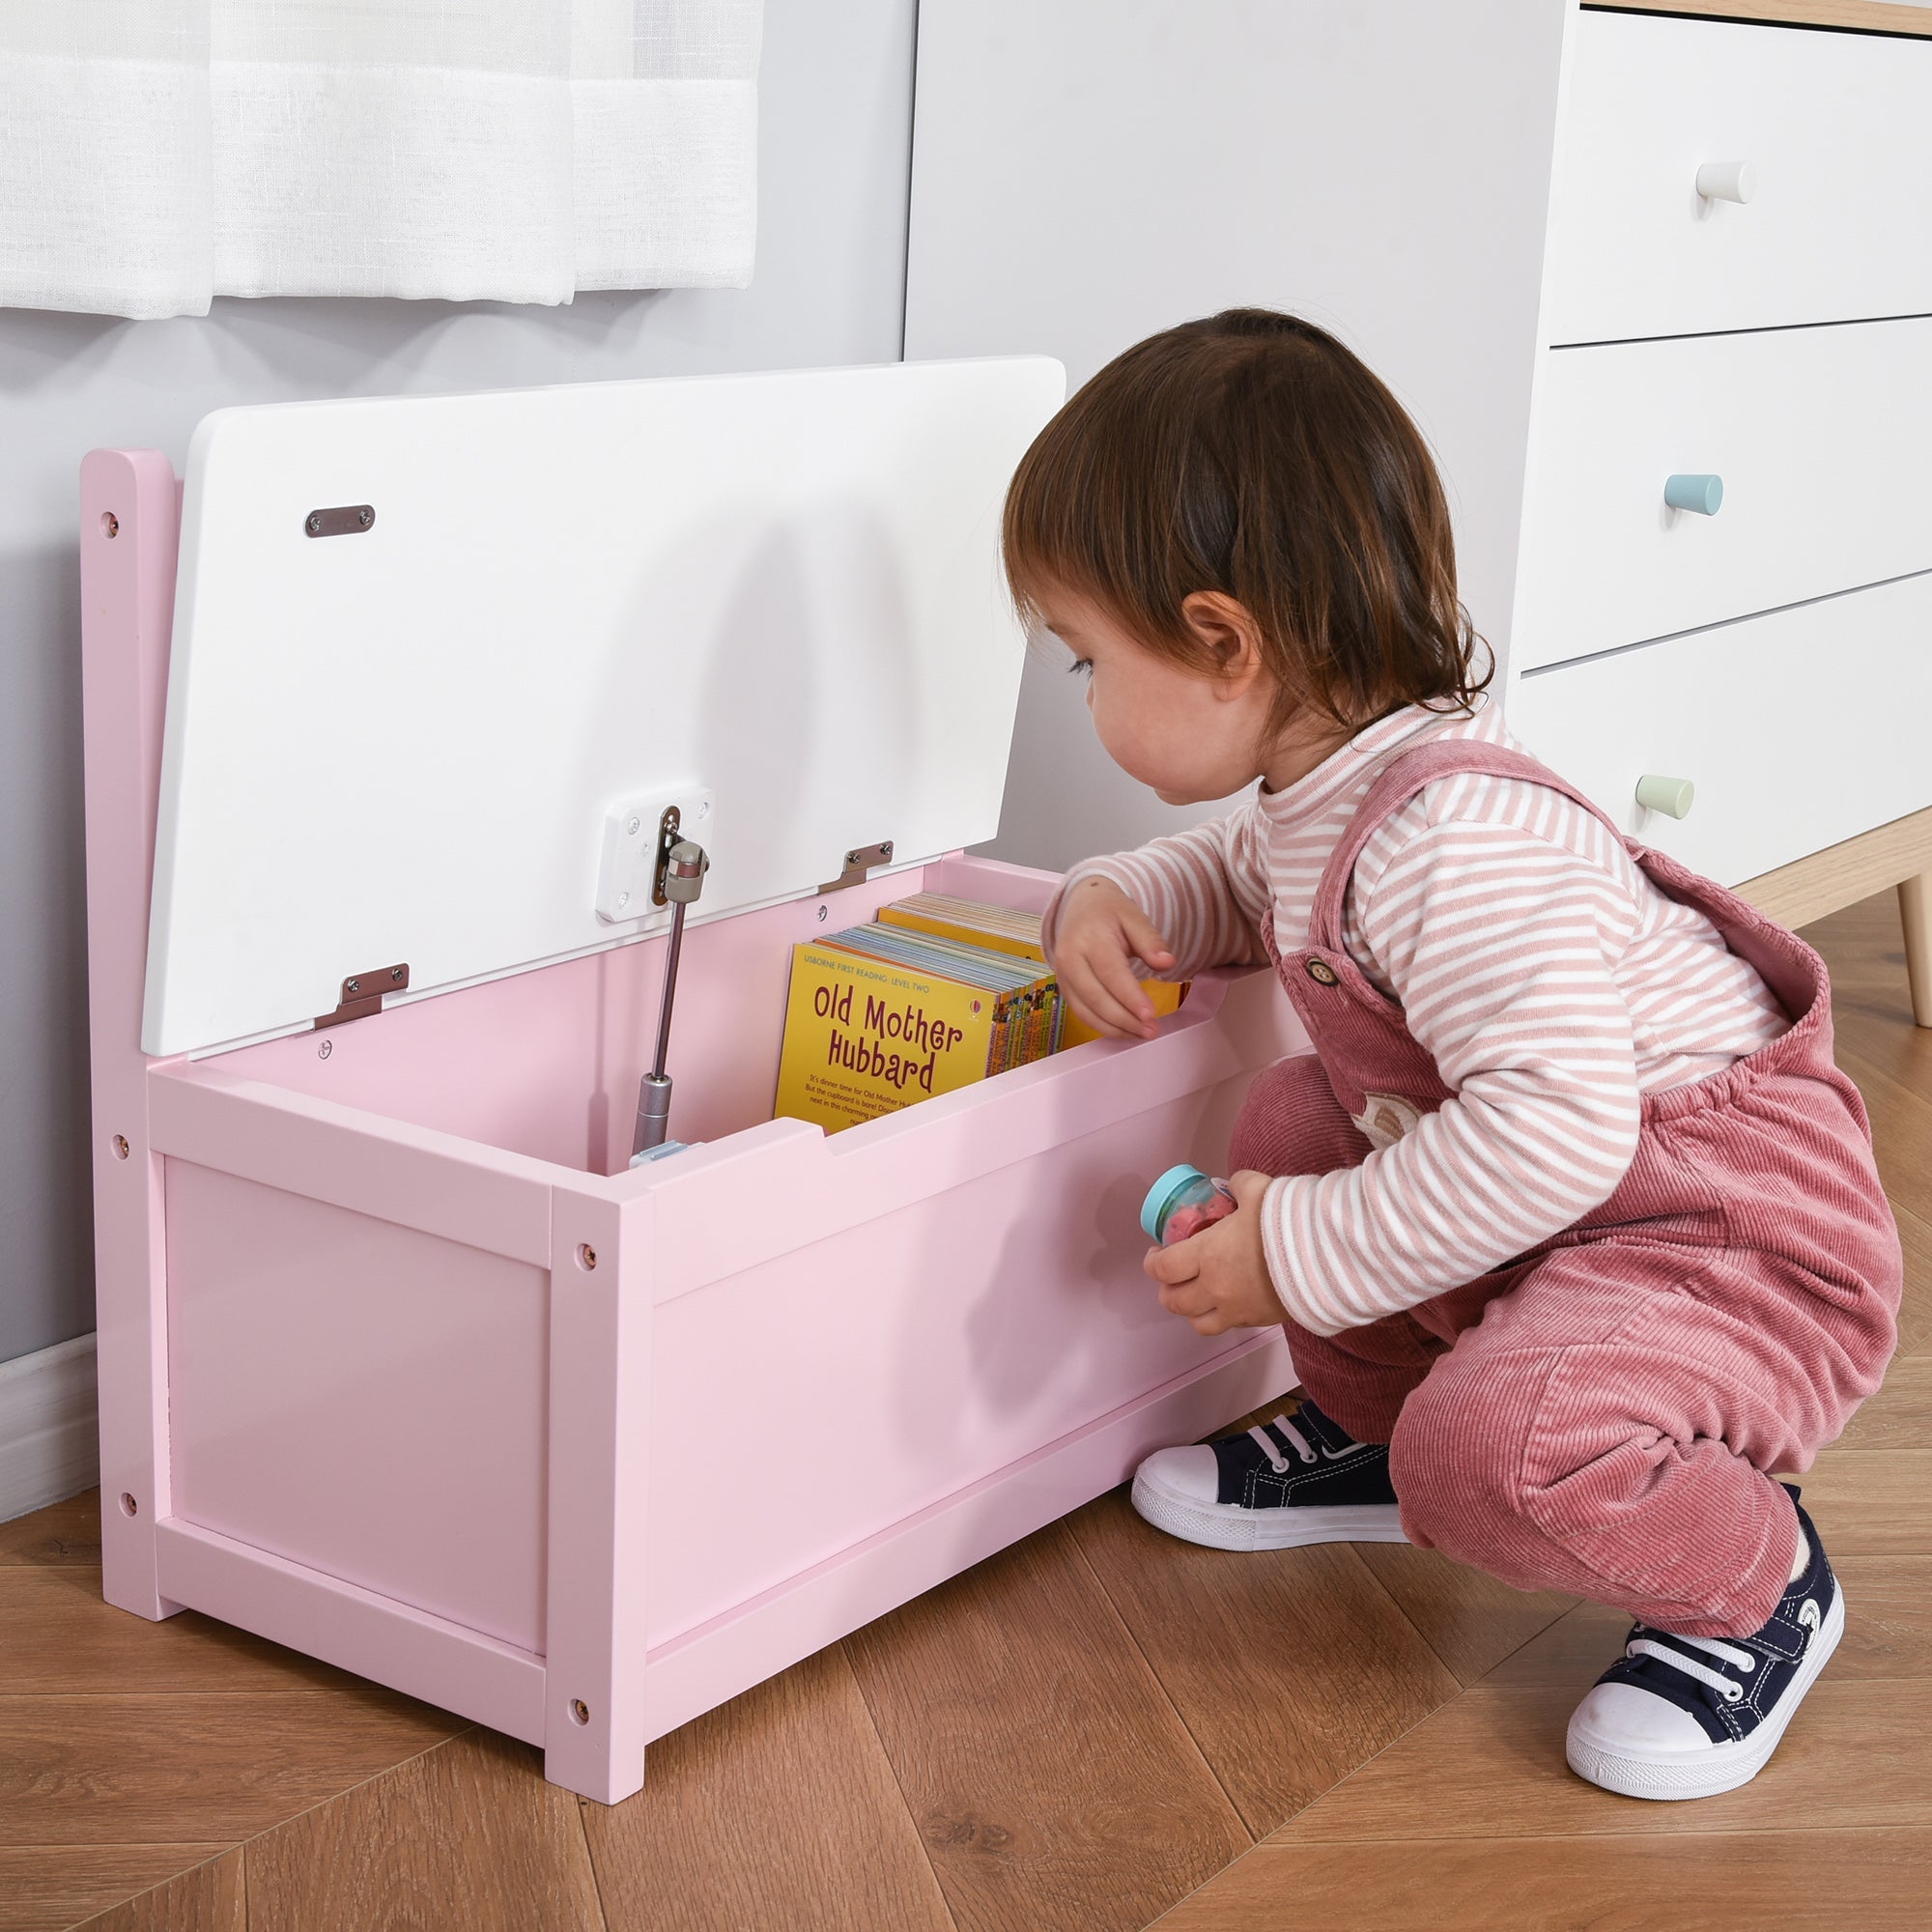 2-IN-1 Wooden Toy Box Kids Seat Bench Storage Chest Cabinet Organizer with Safety Pneumatic Rod 60 x 30 x 50cm Pink-1